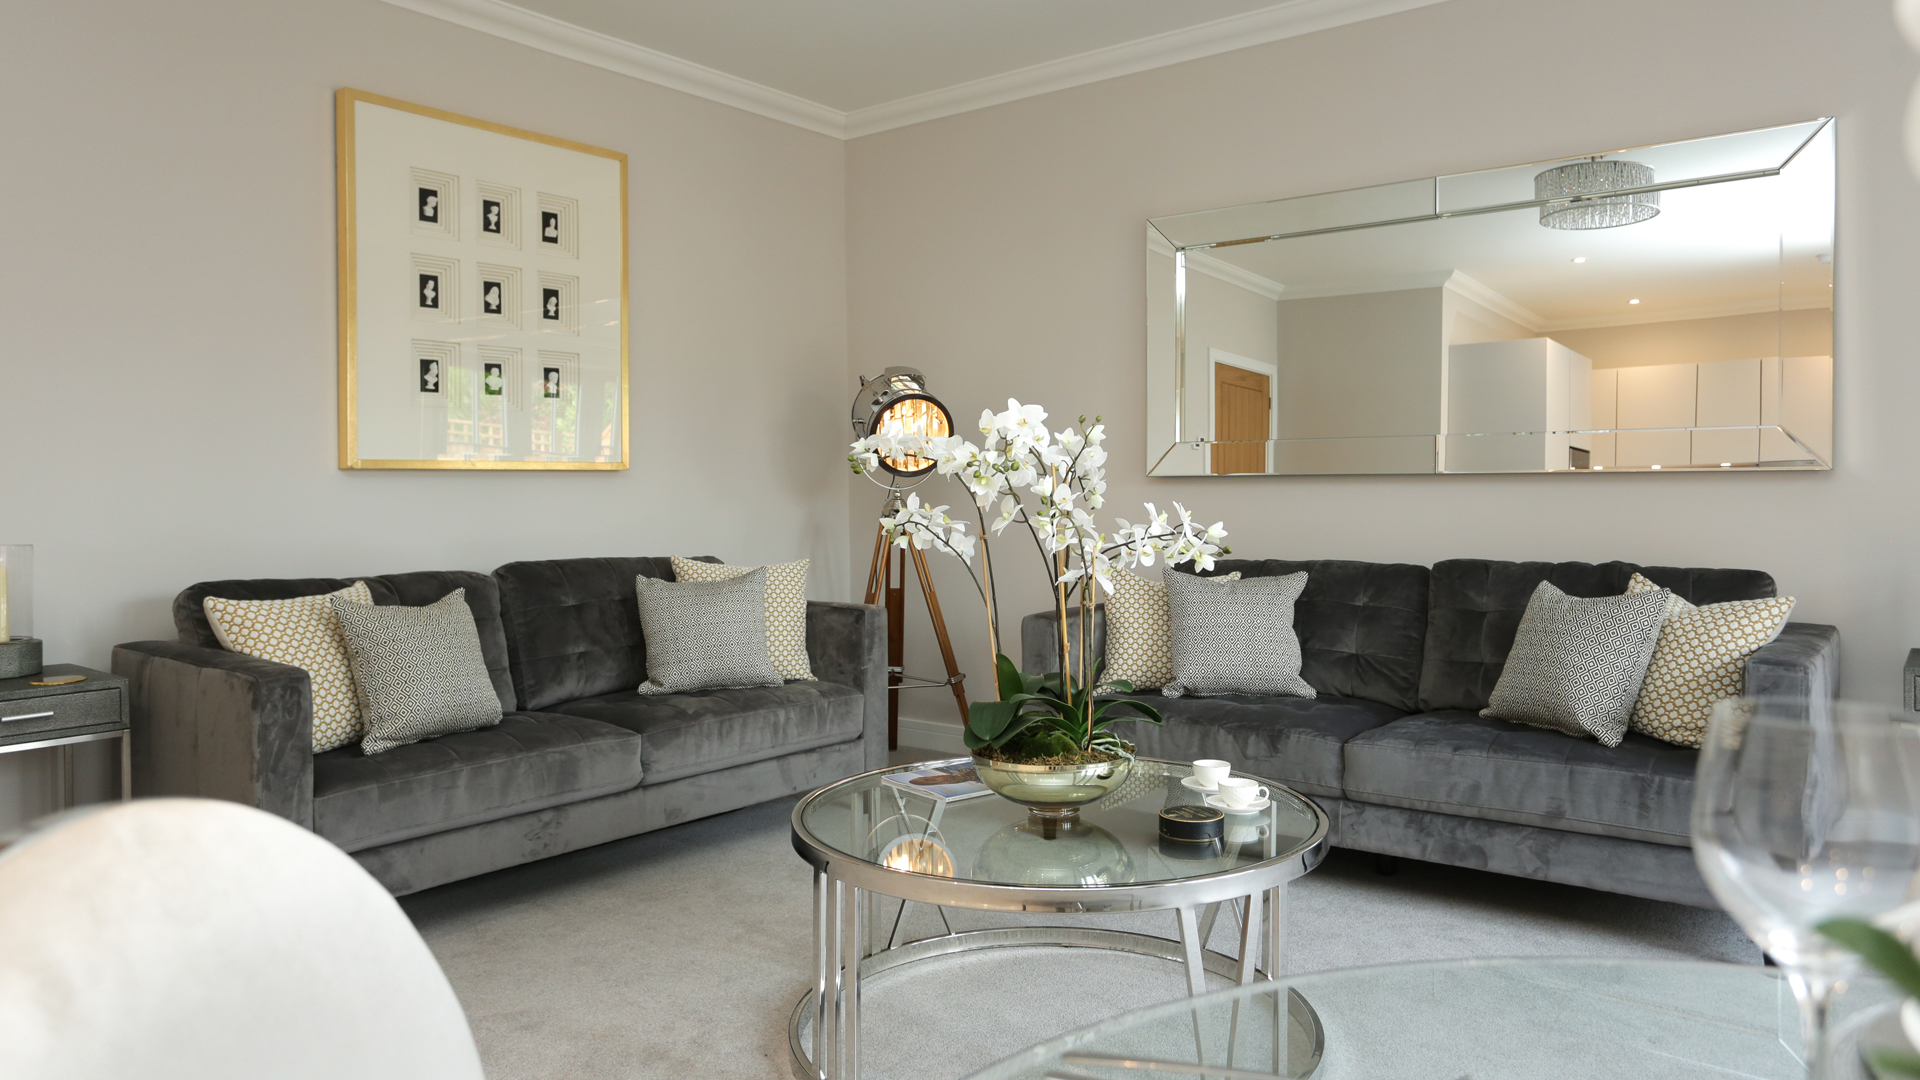 Cobnut Park living room with a mirror, photo and grey sofas.